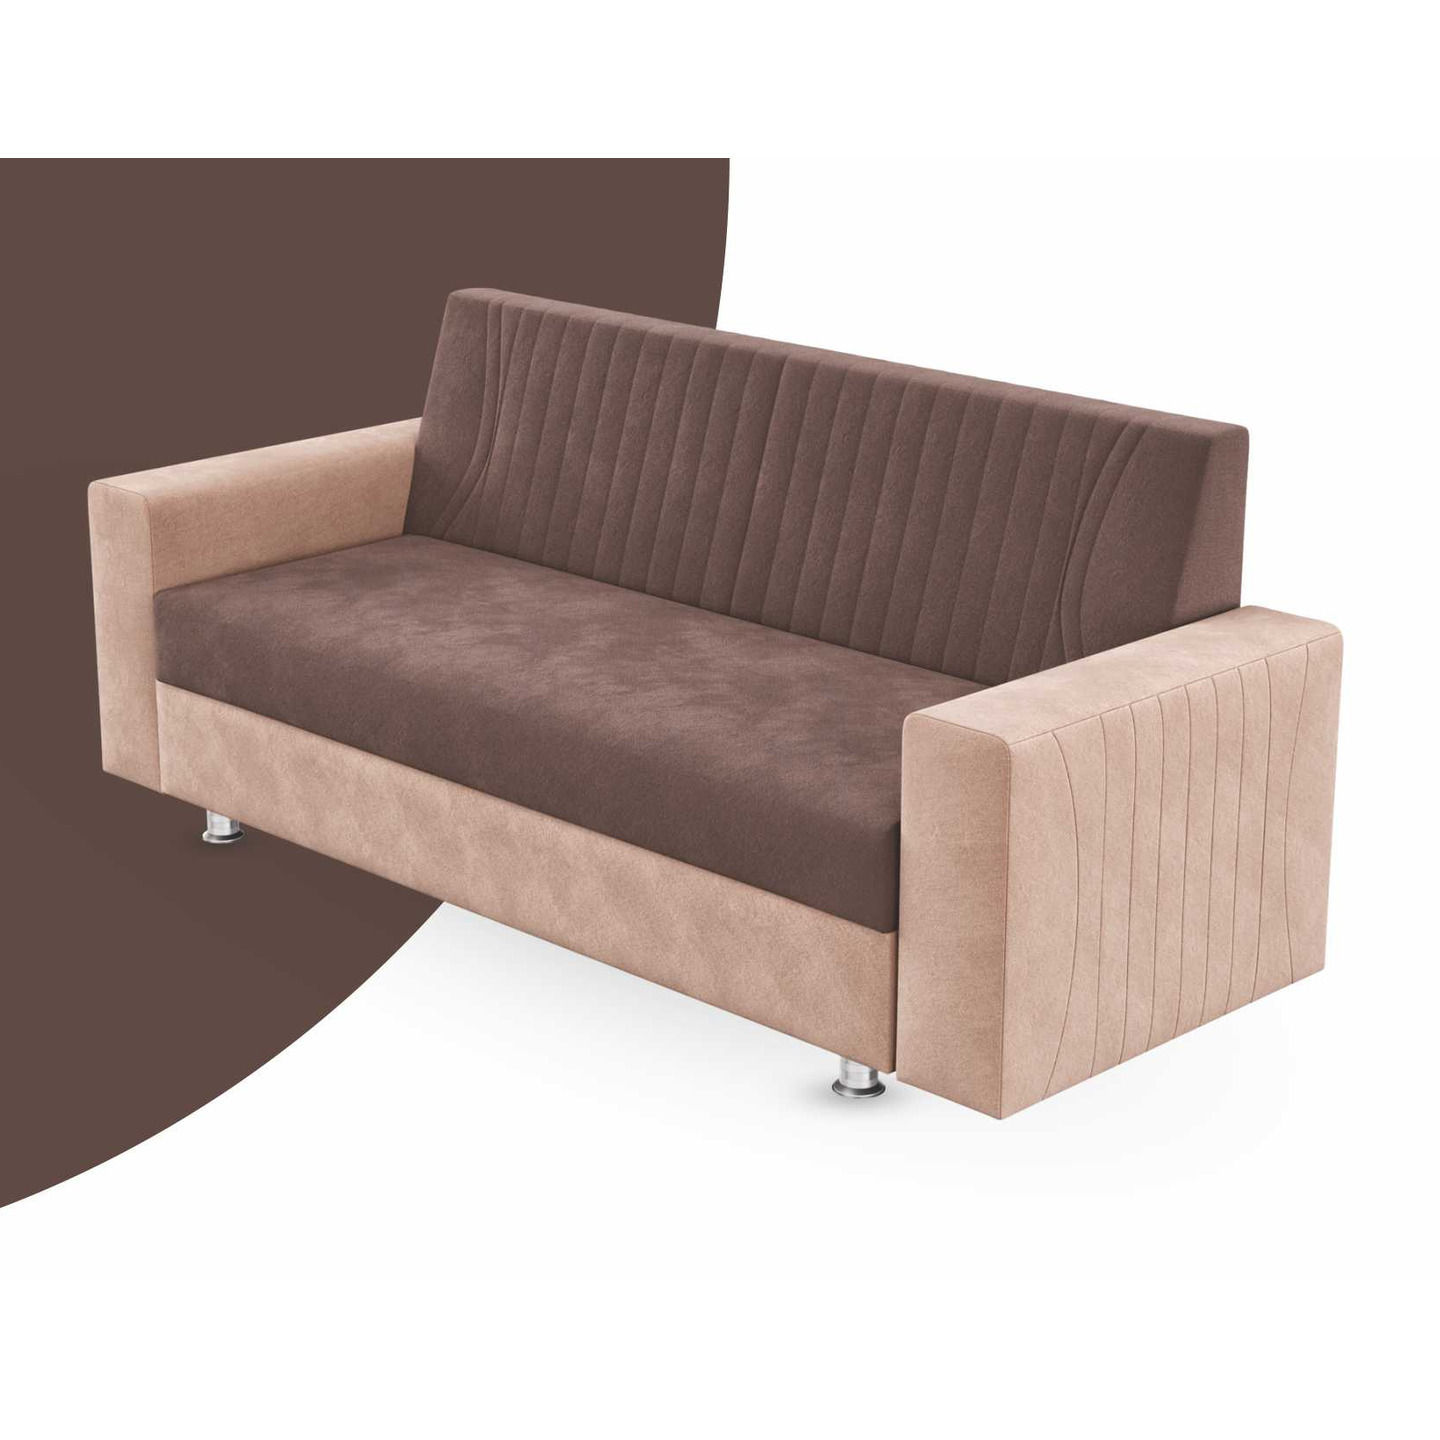 RLF Sofa Set 3+2 DD-579 In Brown Colour